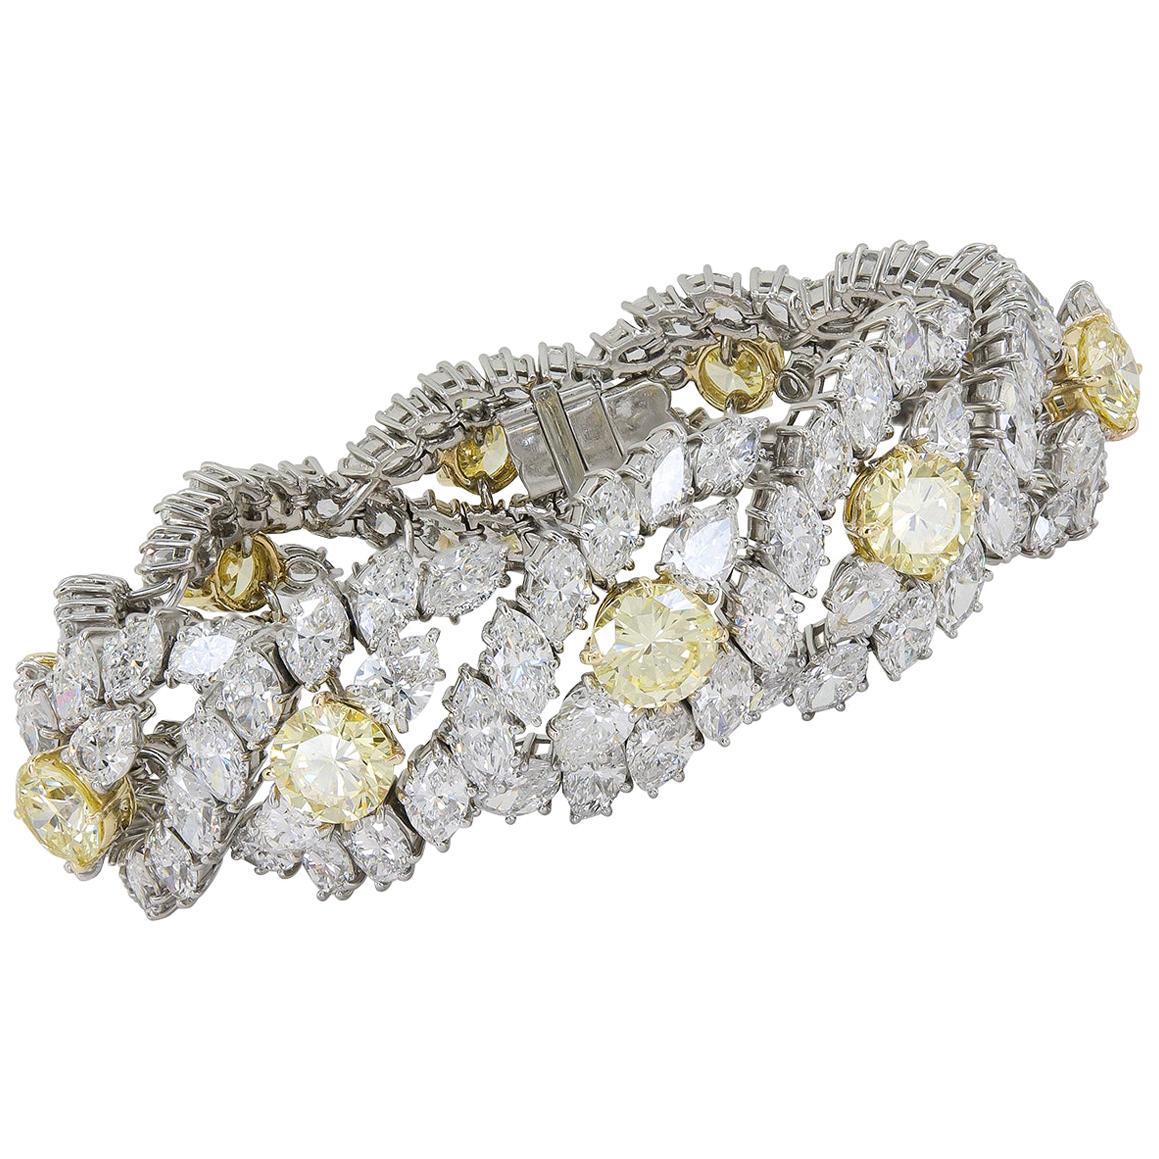 Harry Winston Diamond Cuffs | Royal jewels, Stacked jewelry, Harry winston  diamond